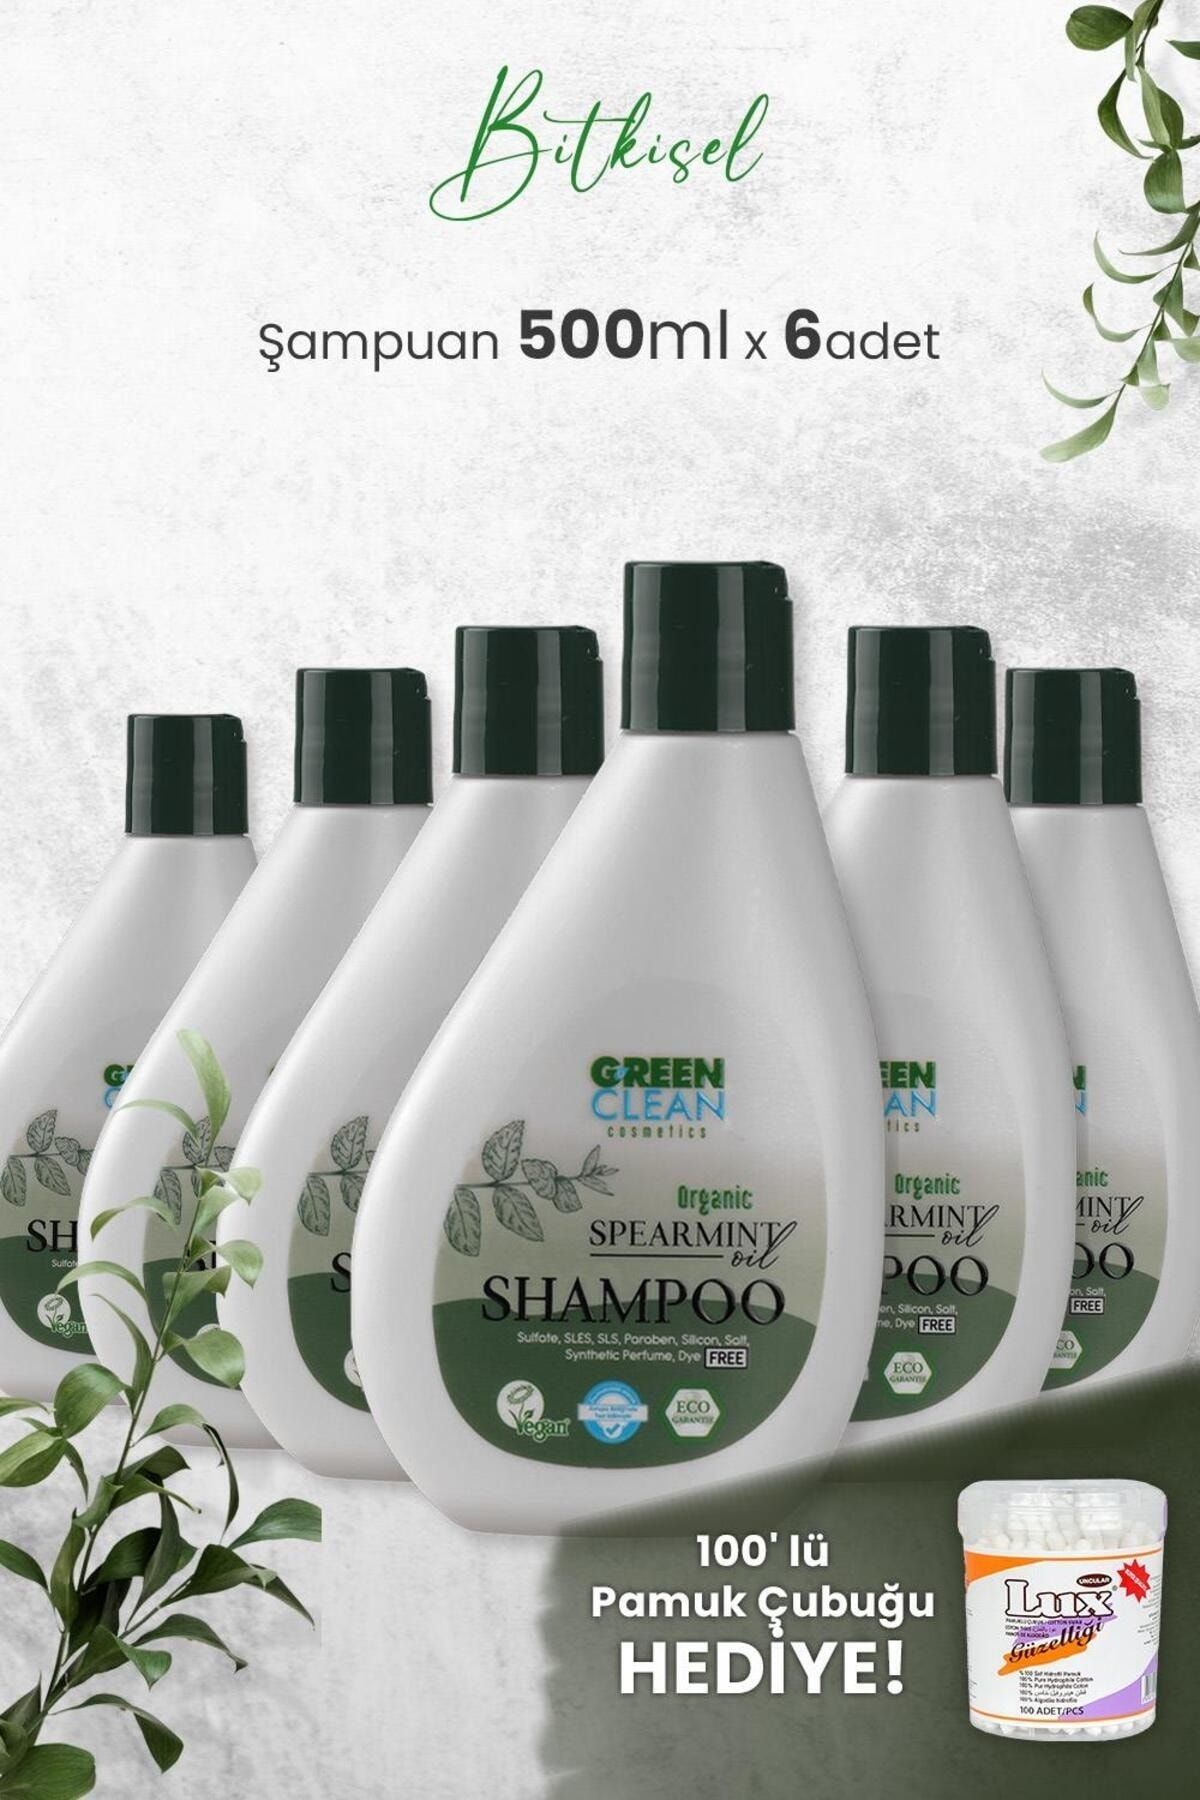 Green Clean Şampuan Spearmint 275 ml x 6 Adet ve Hediyeli